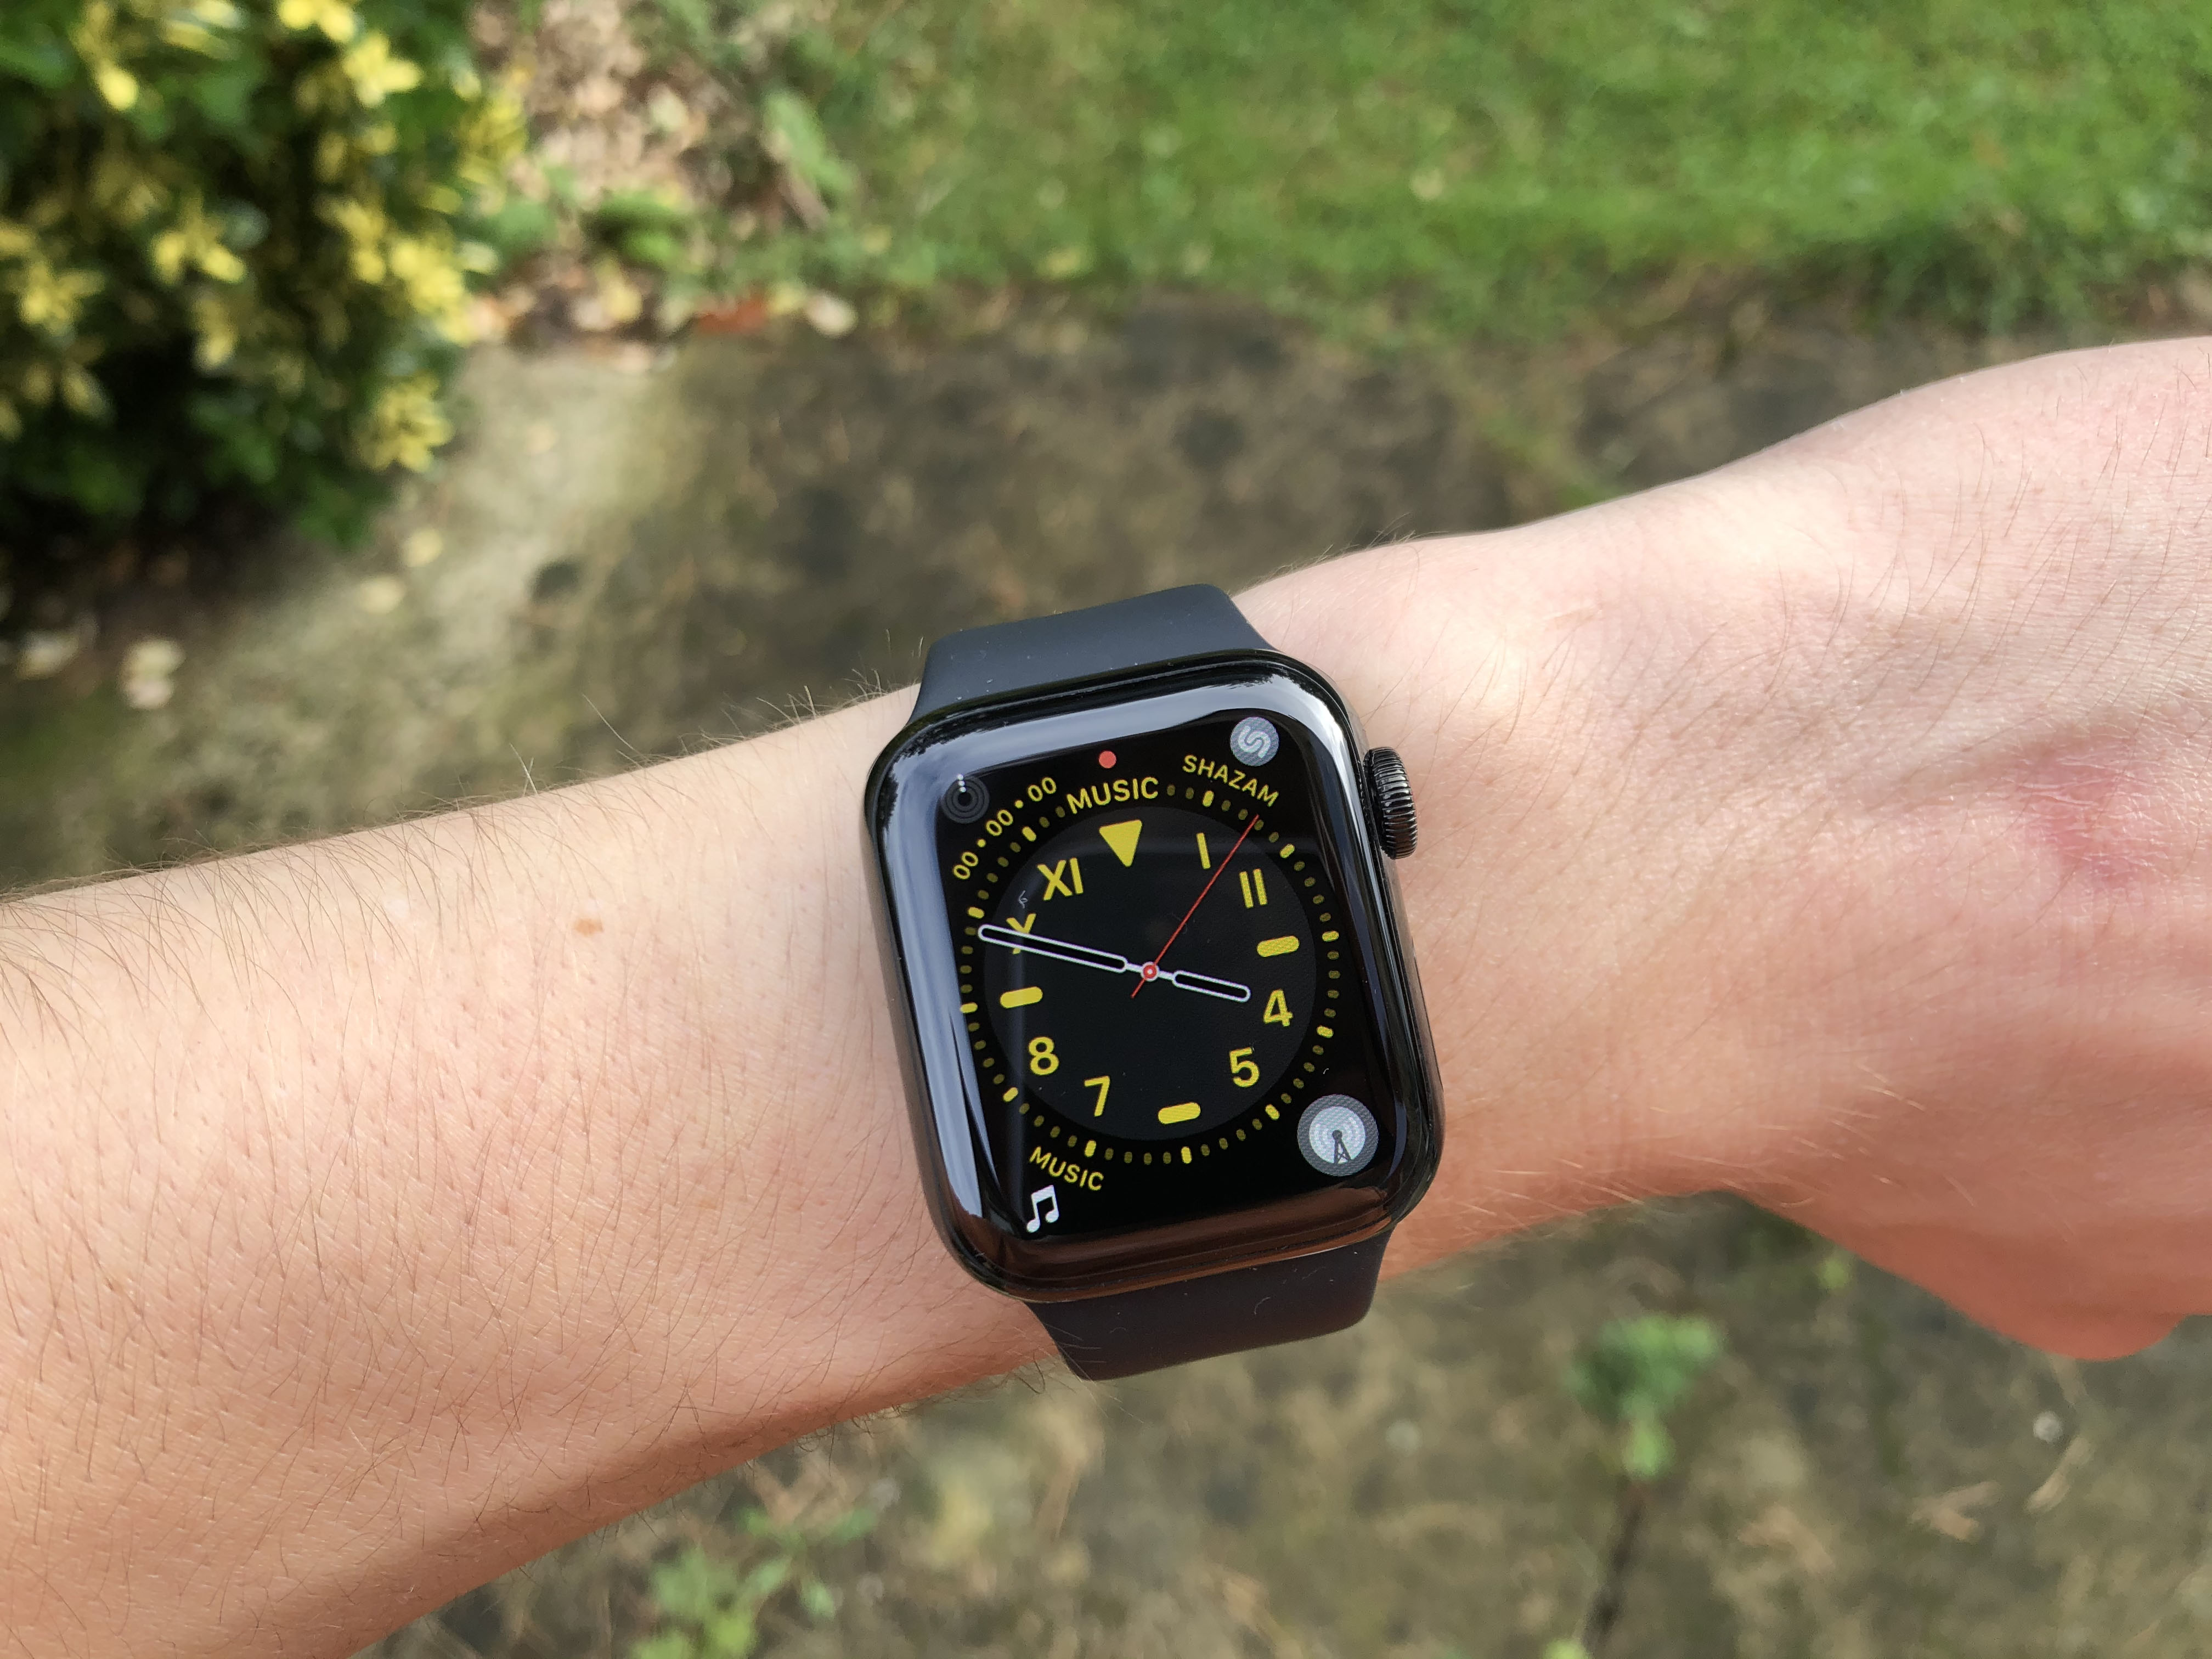 Apple Watch Series 5 verdict